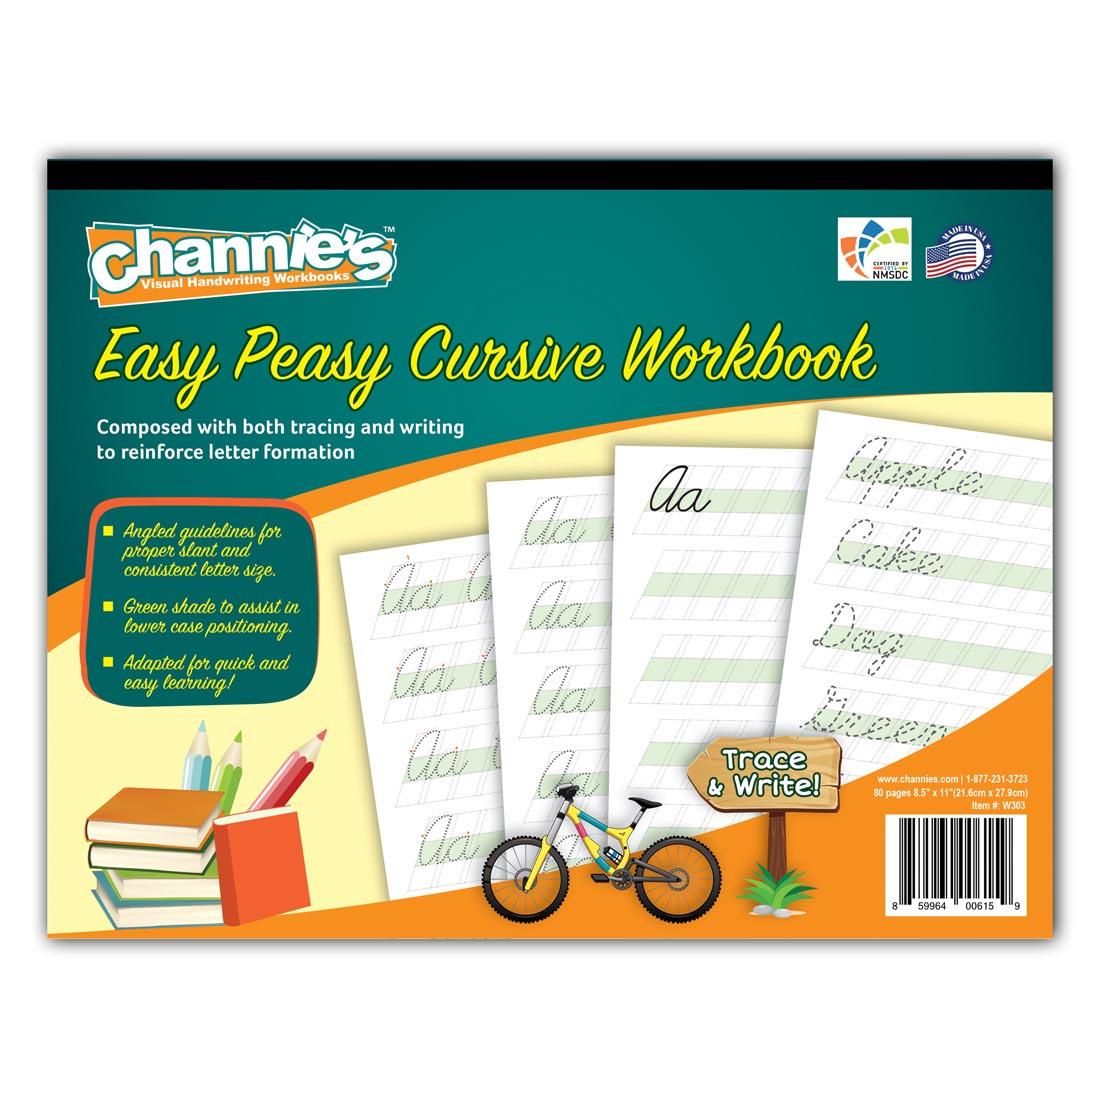 Channie's Visual Handwriting Workbook: Easy Peasy Cursive Workbook